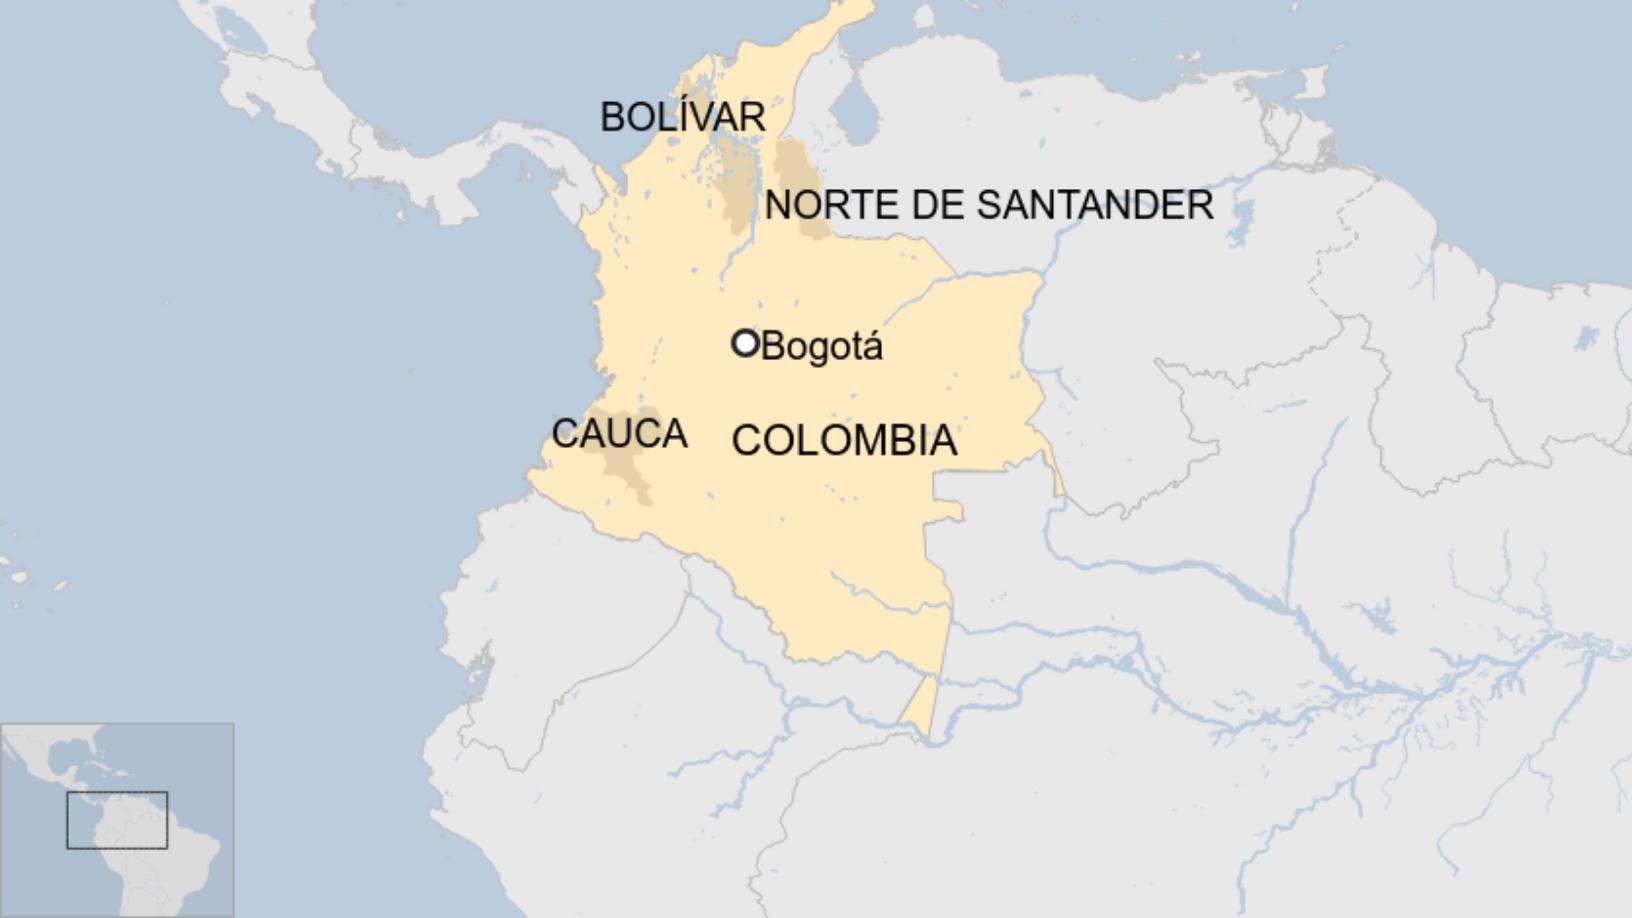 Cauca region, Colombia. (Photo internet reproduction)